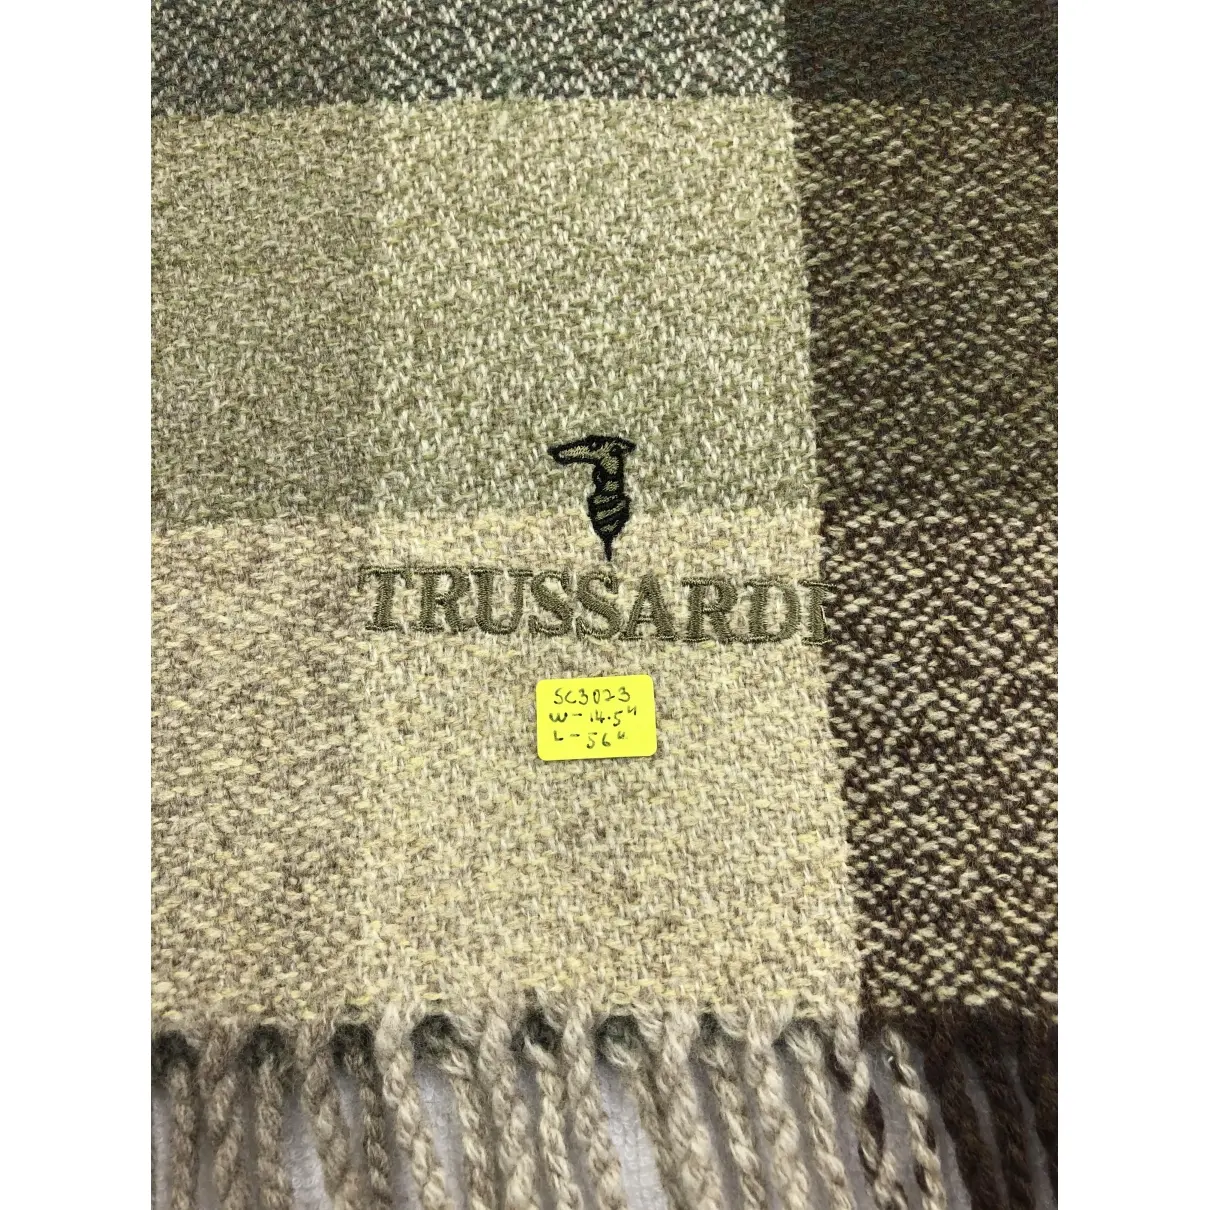 Buy Trussardi Scarf & pocket square online